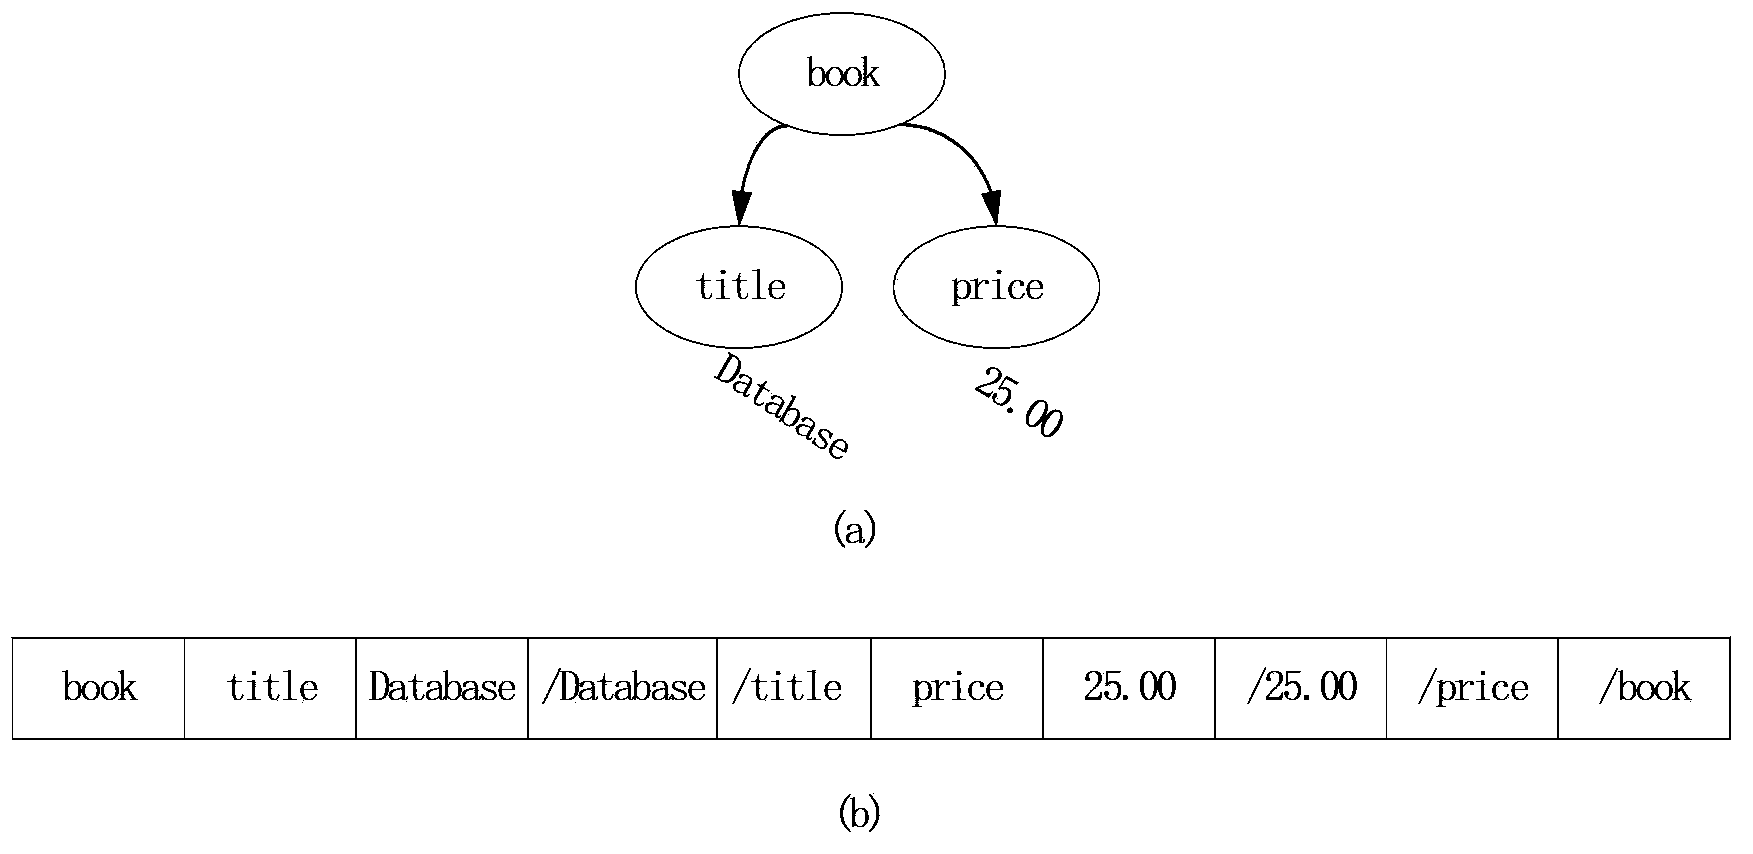 Query method for XML (Extensive Makeup Language) data